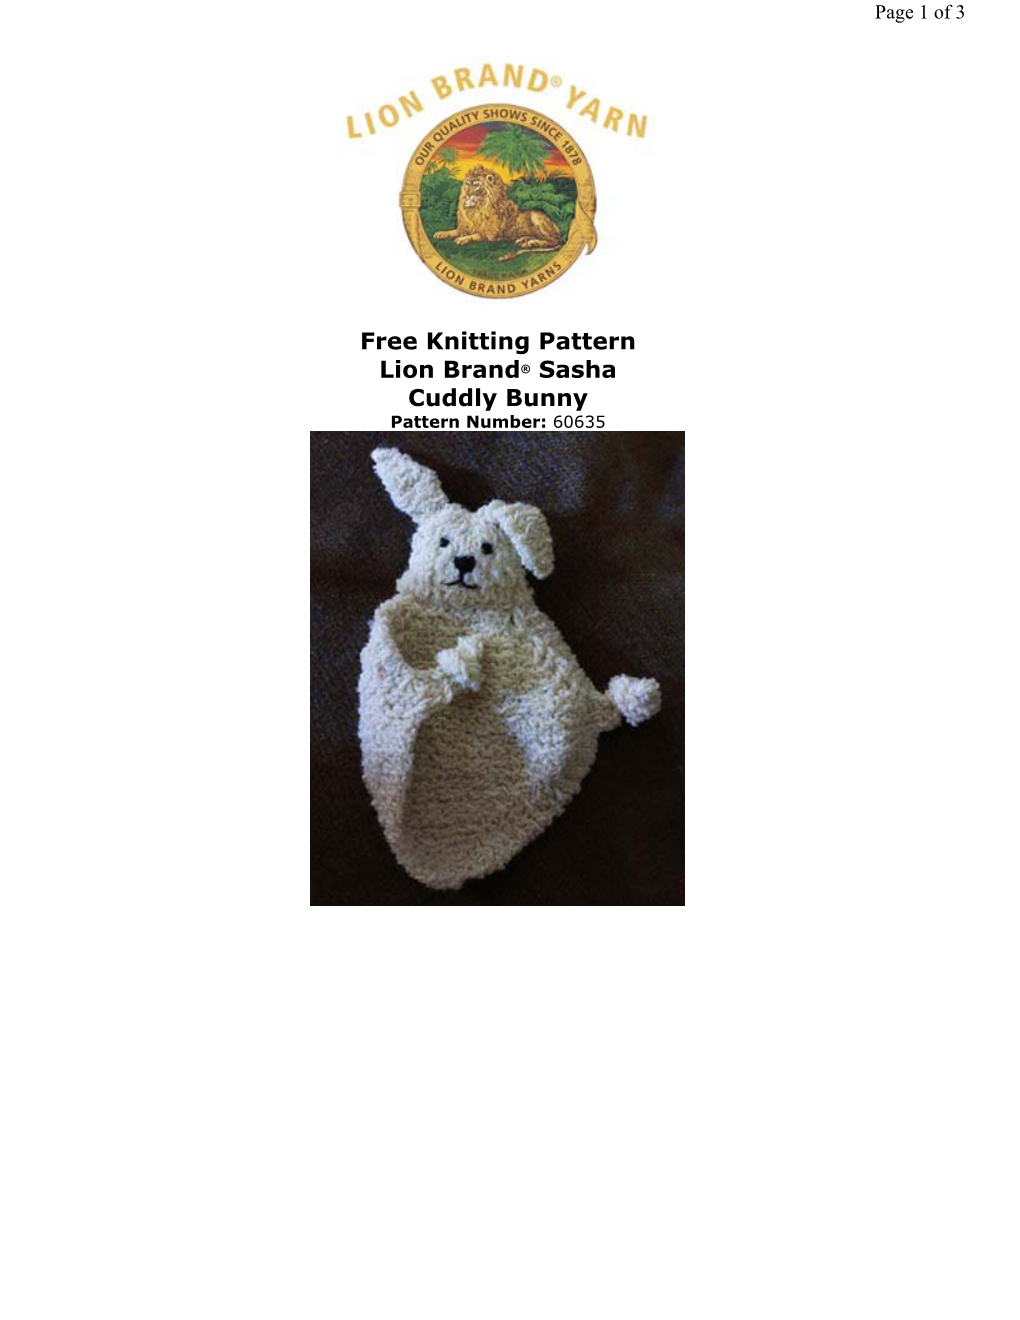 Free Knitting Pattern Lion Brand® Sasha Cuddly Bunny Pattern Number: 60635